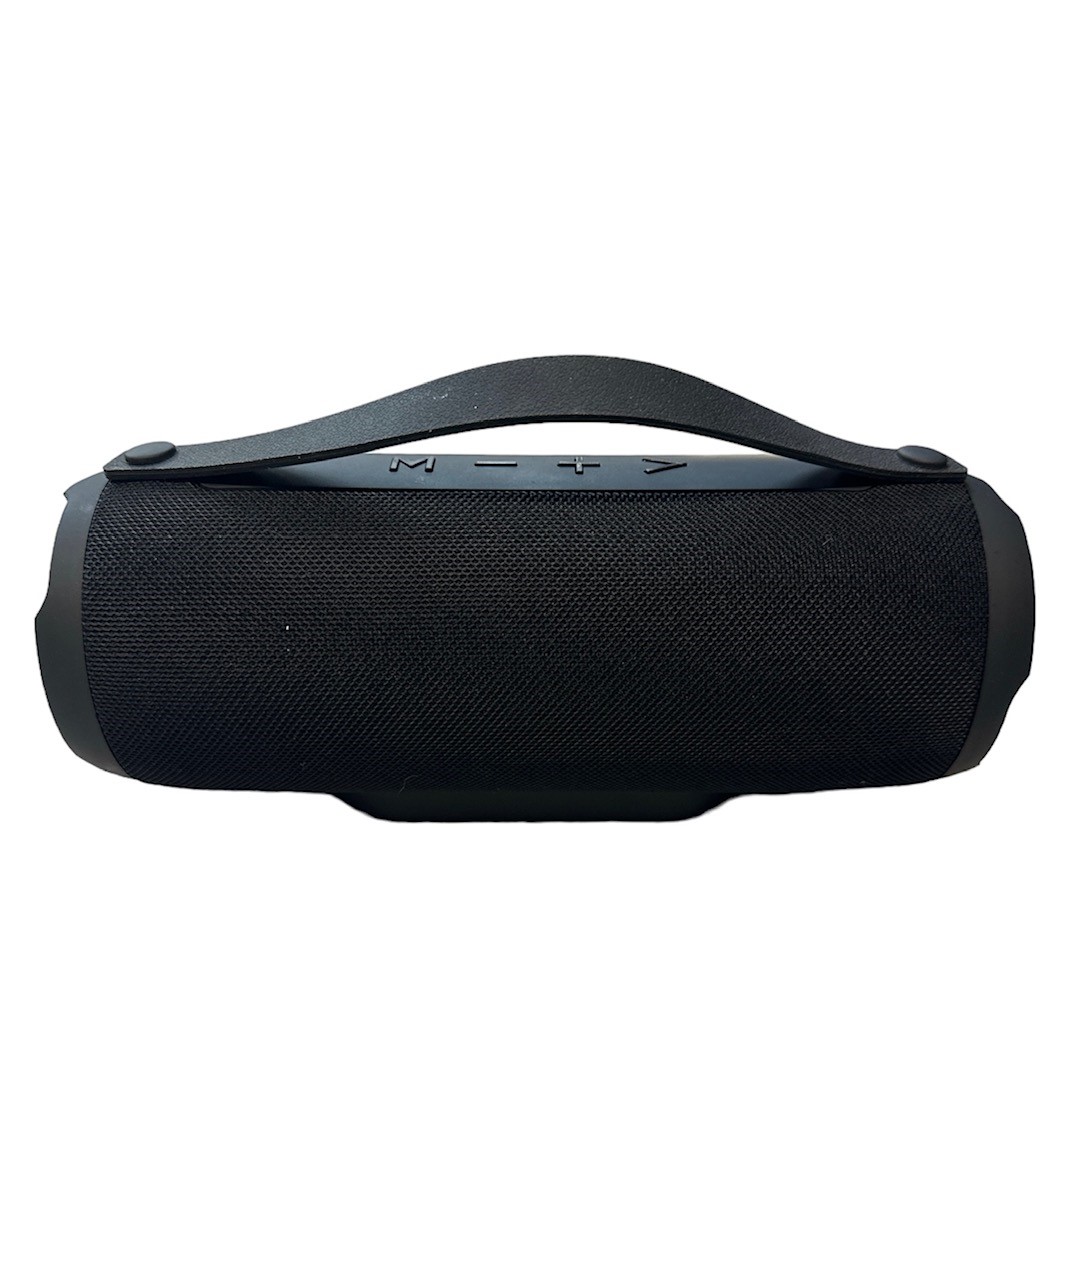 Intempo Bluetooth Speaker - Black - Unboxed